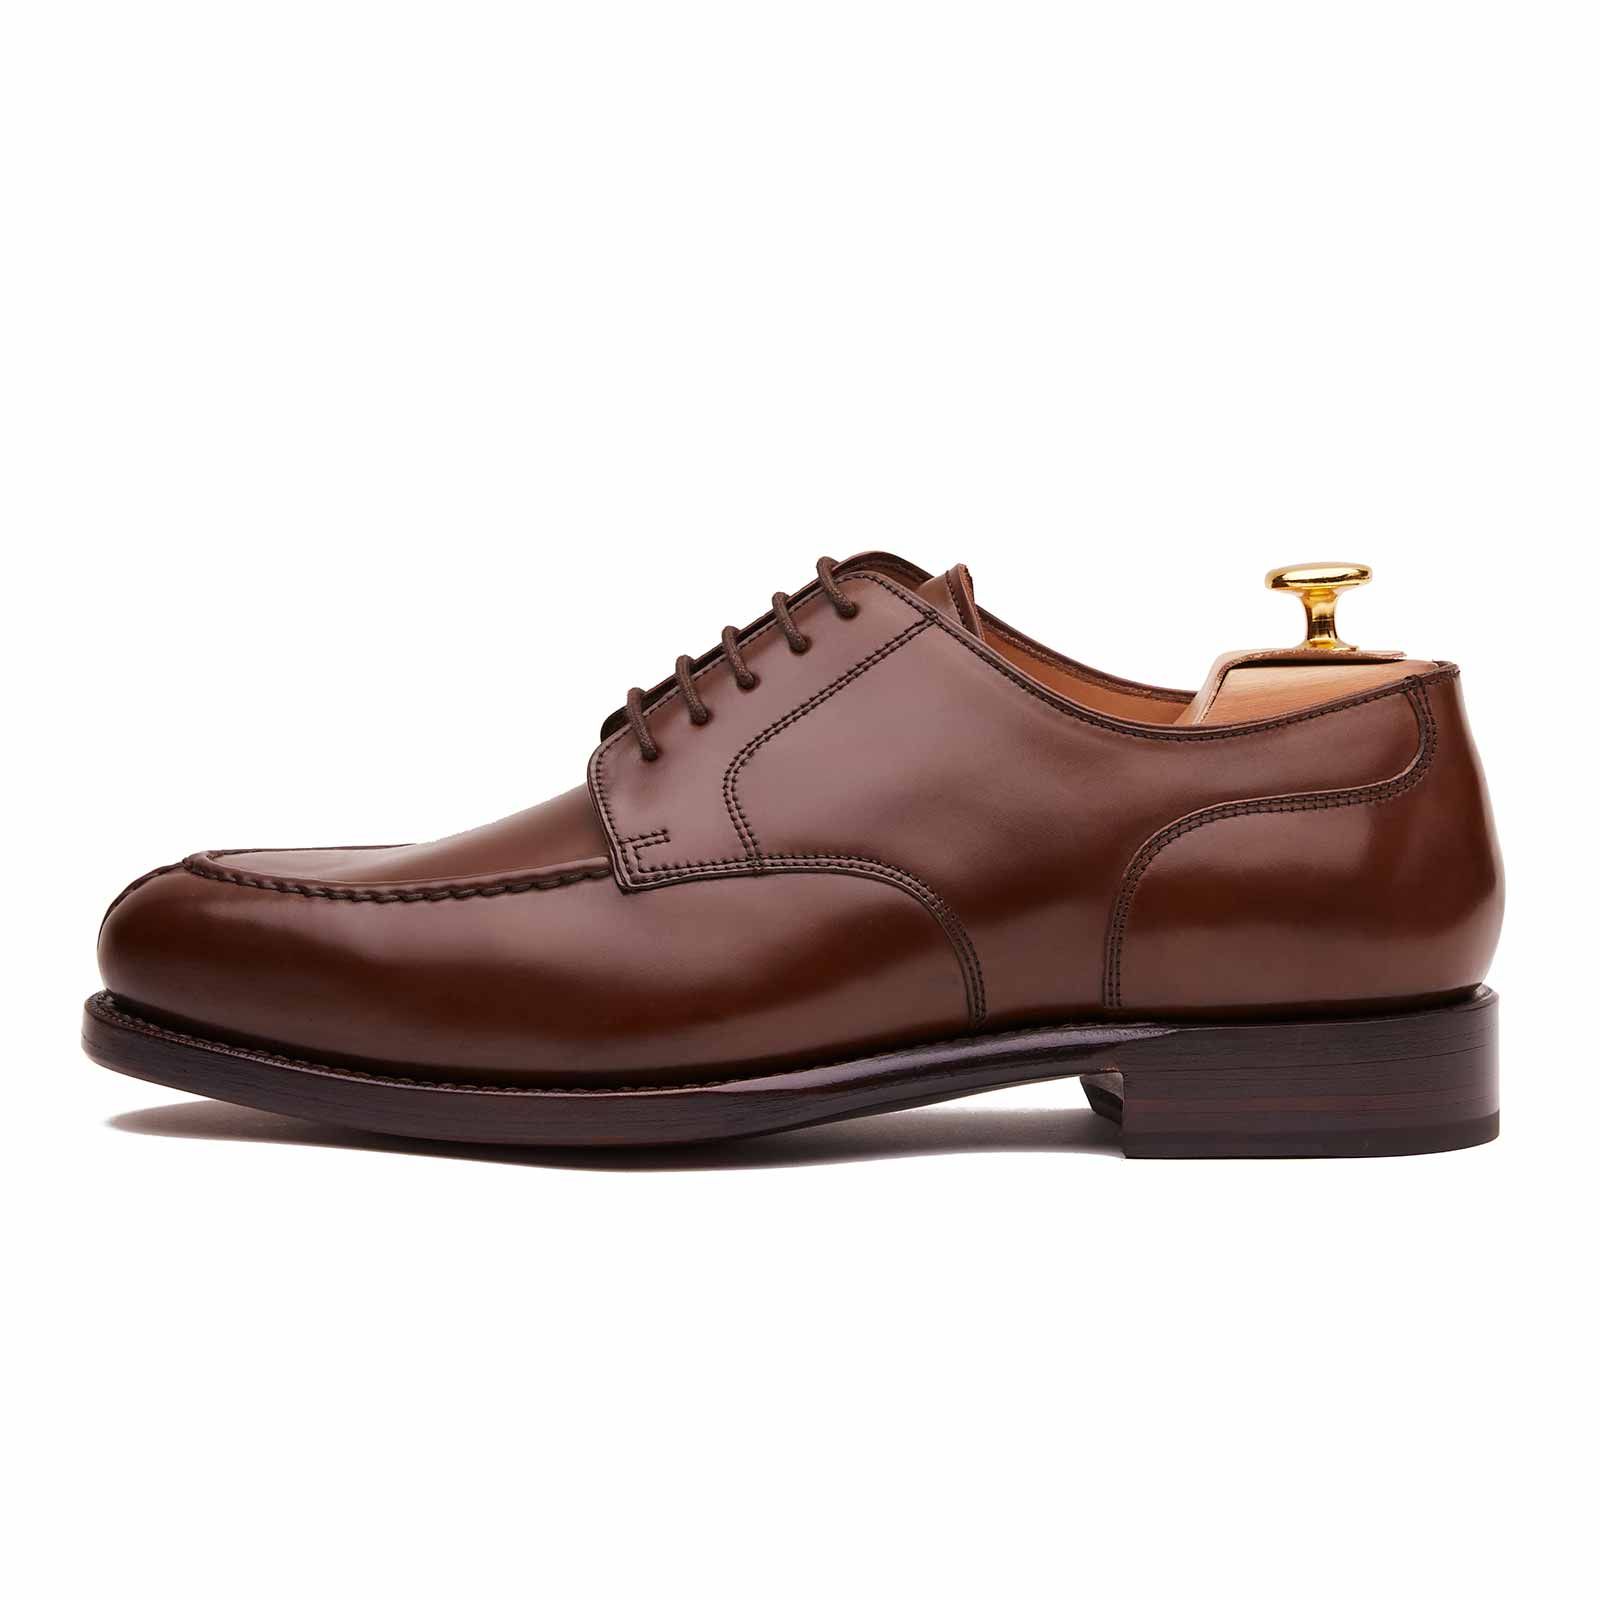 Peligro profundamente Fraude The Burton: Zapato Corodovan Marrón | Crownhill Shoes